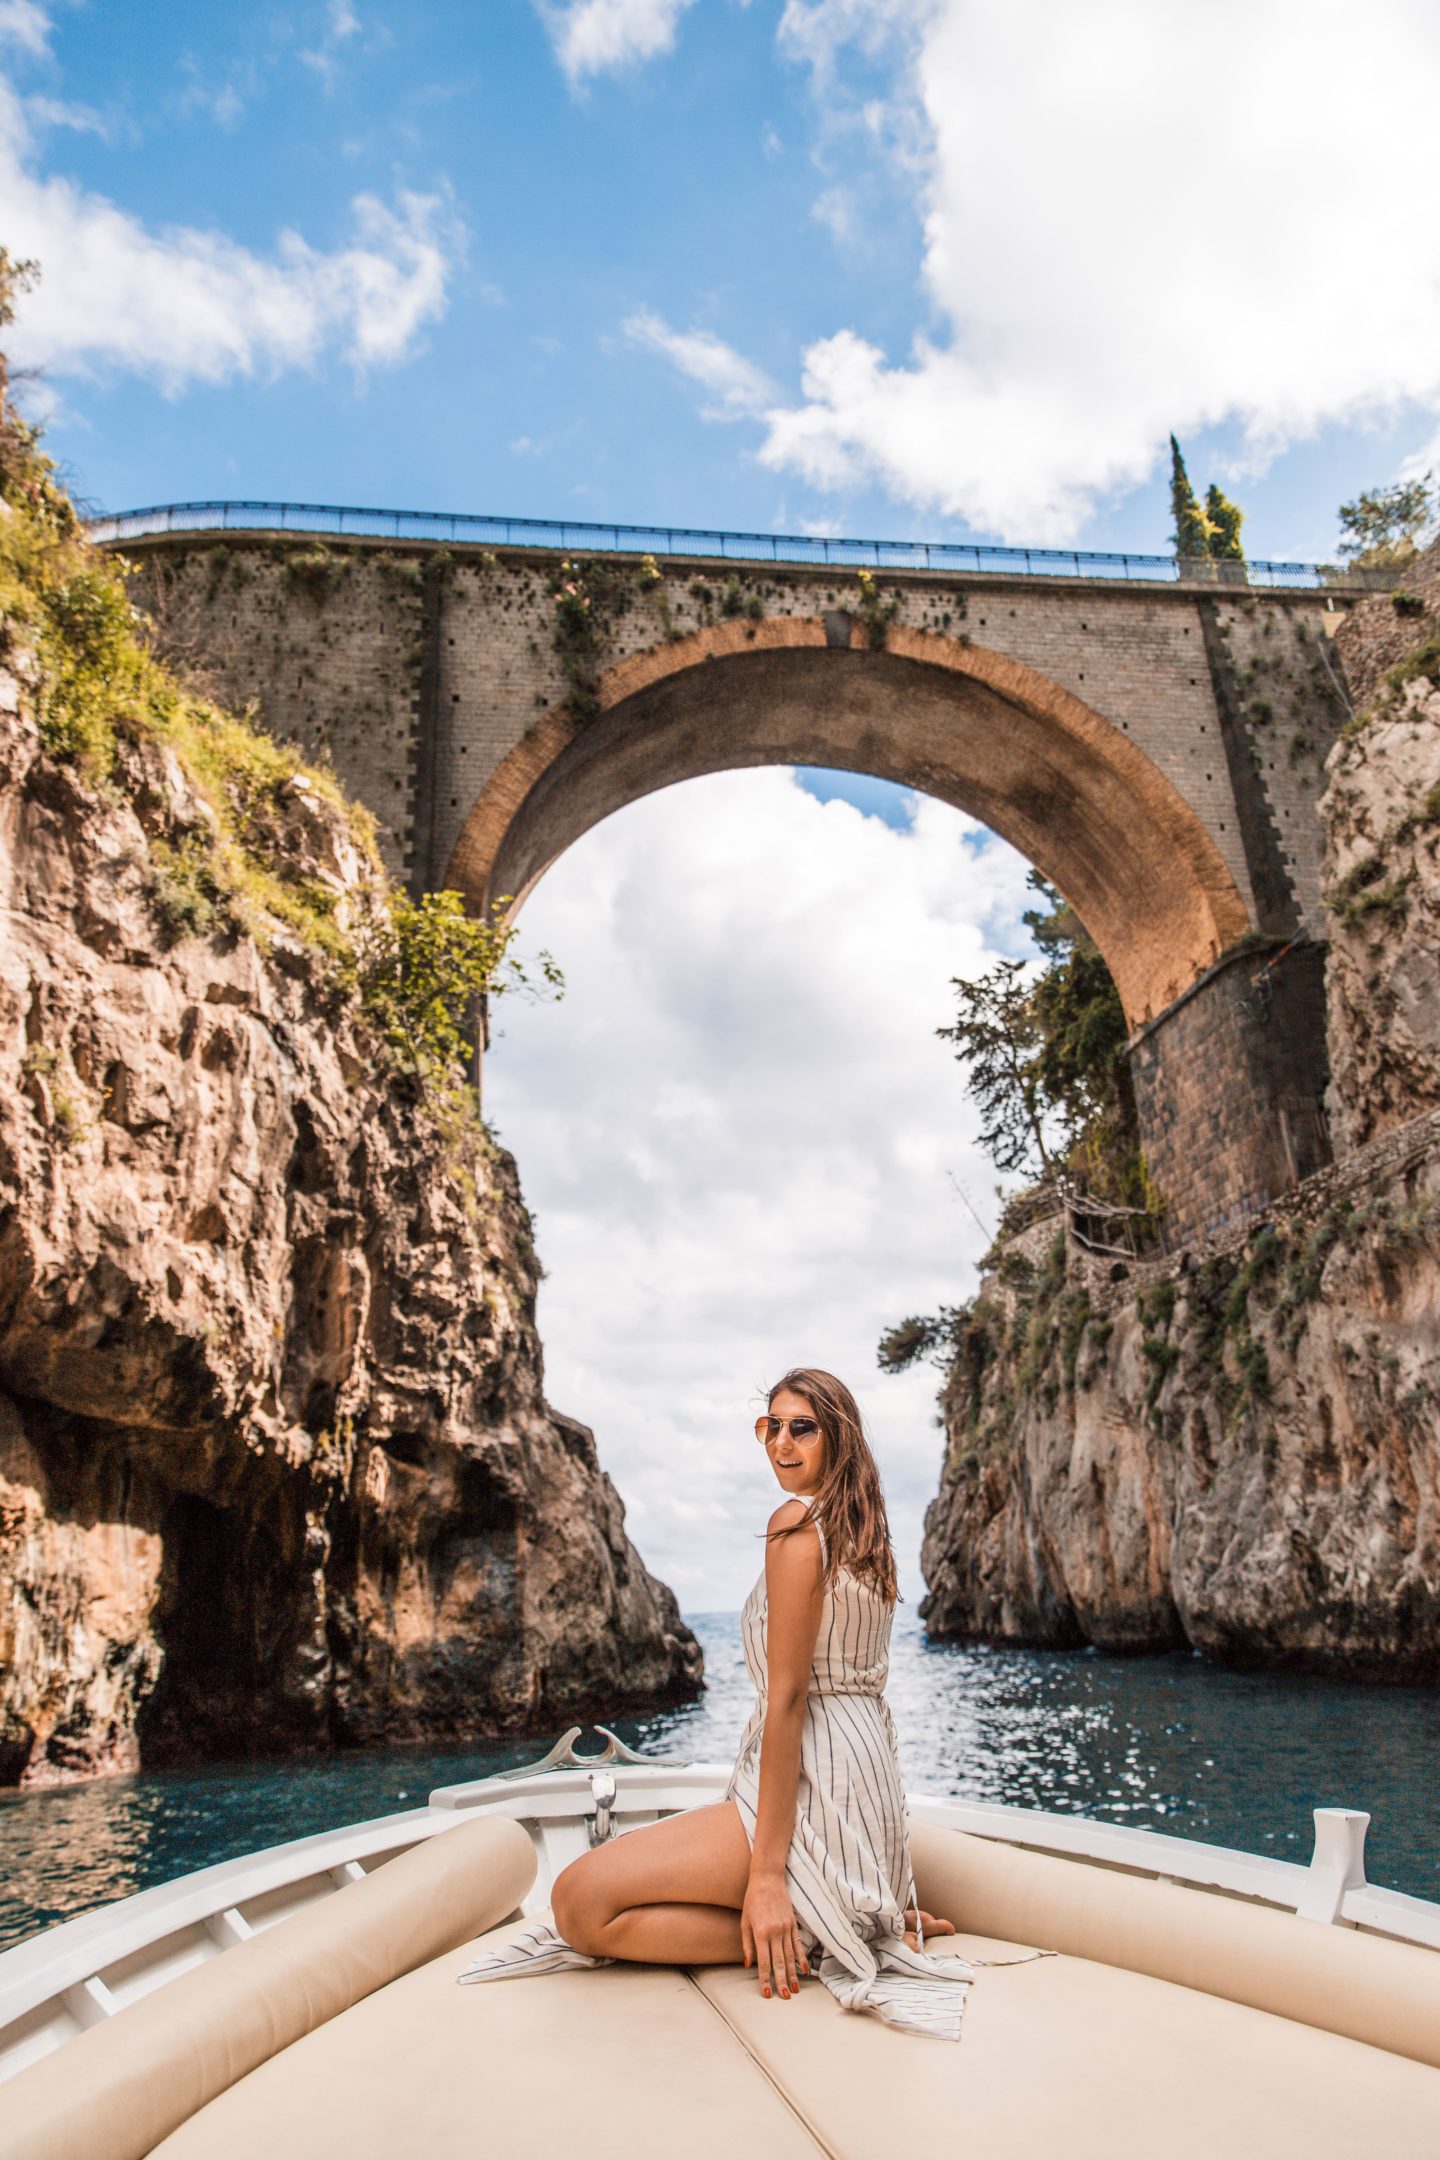 The Best Positano Instagram Shots | 12 Beautiful Shots You Can't Miss: Fiordo di Furore 